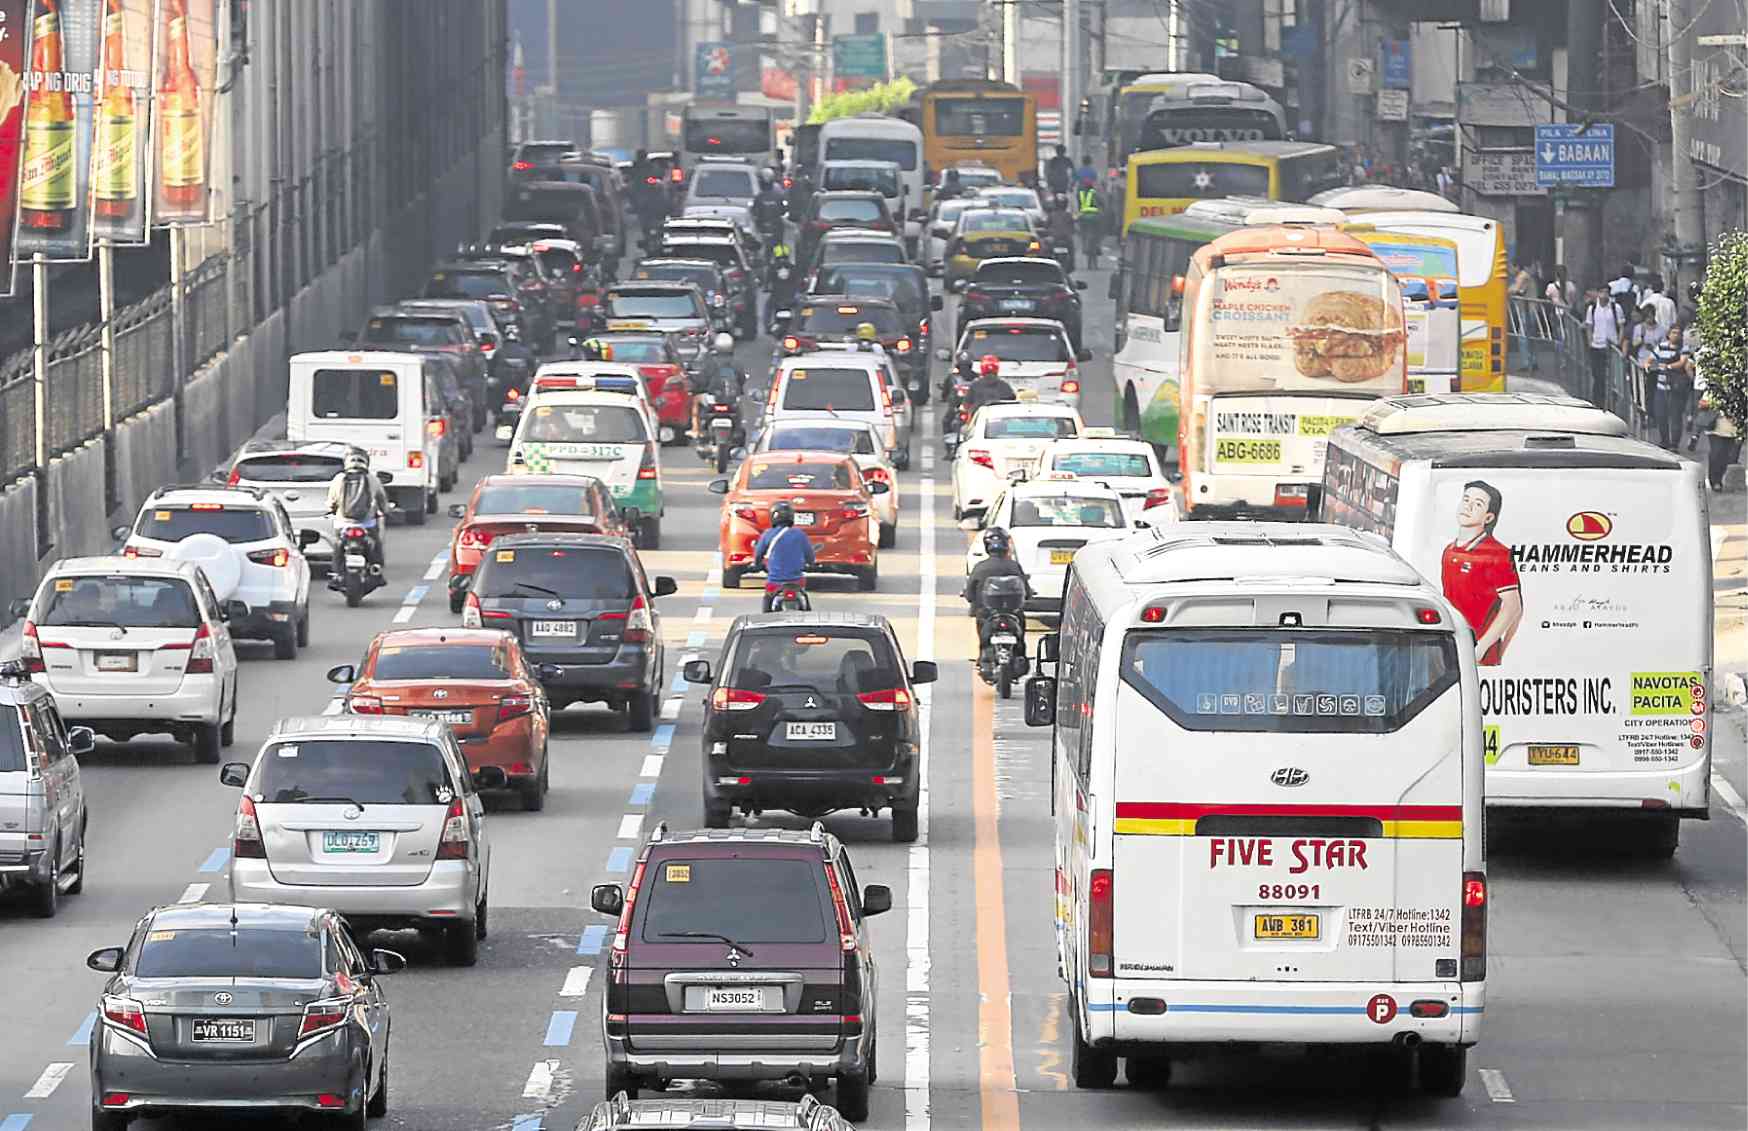 MMDA sets 60-kph maximum speed limit on Edsa, other major roads